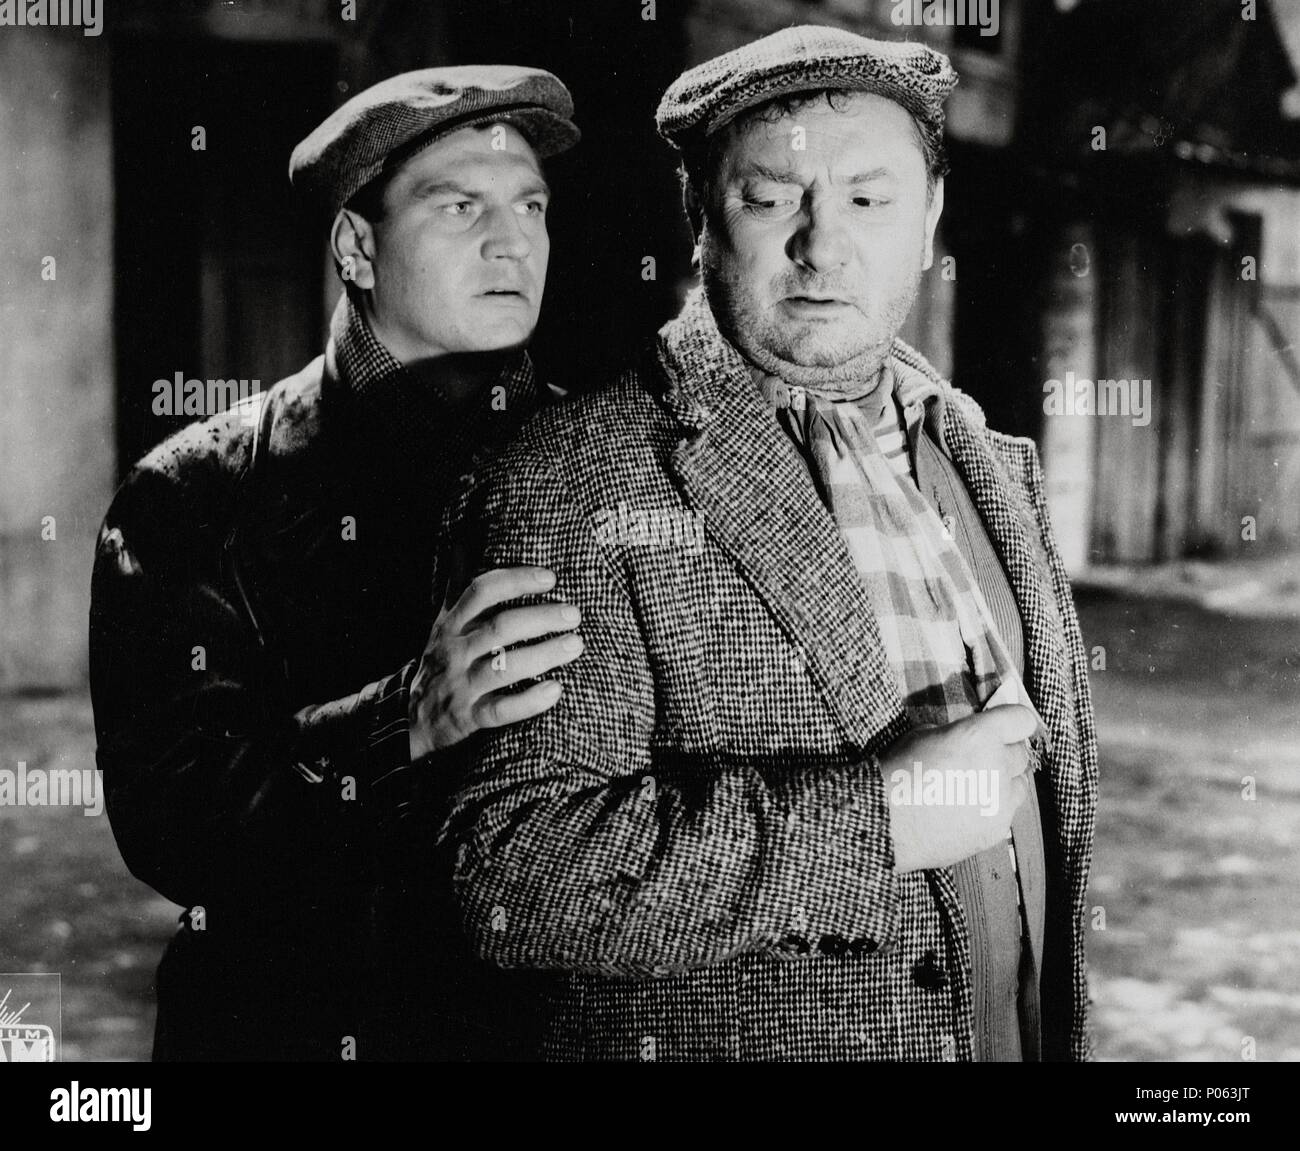 Original Film Title: PORTE DES LILAS. English Title: GATES OF PARIS, THE.  Film Director: RENE CLAIR. Year: 1957. Stars: HENRI VIDAL; PIERRE BRASSEUR  Stock Photo - Alamy